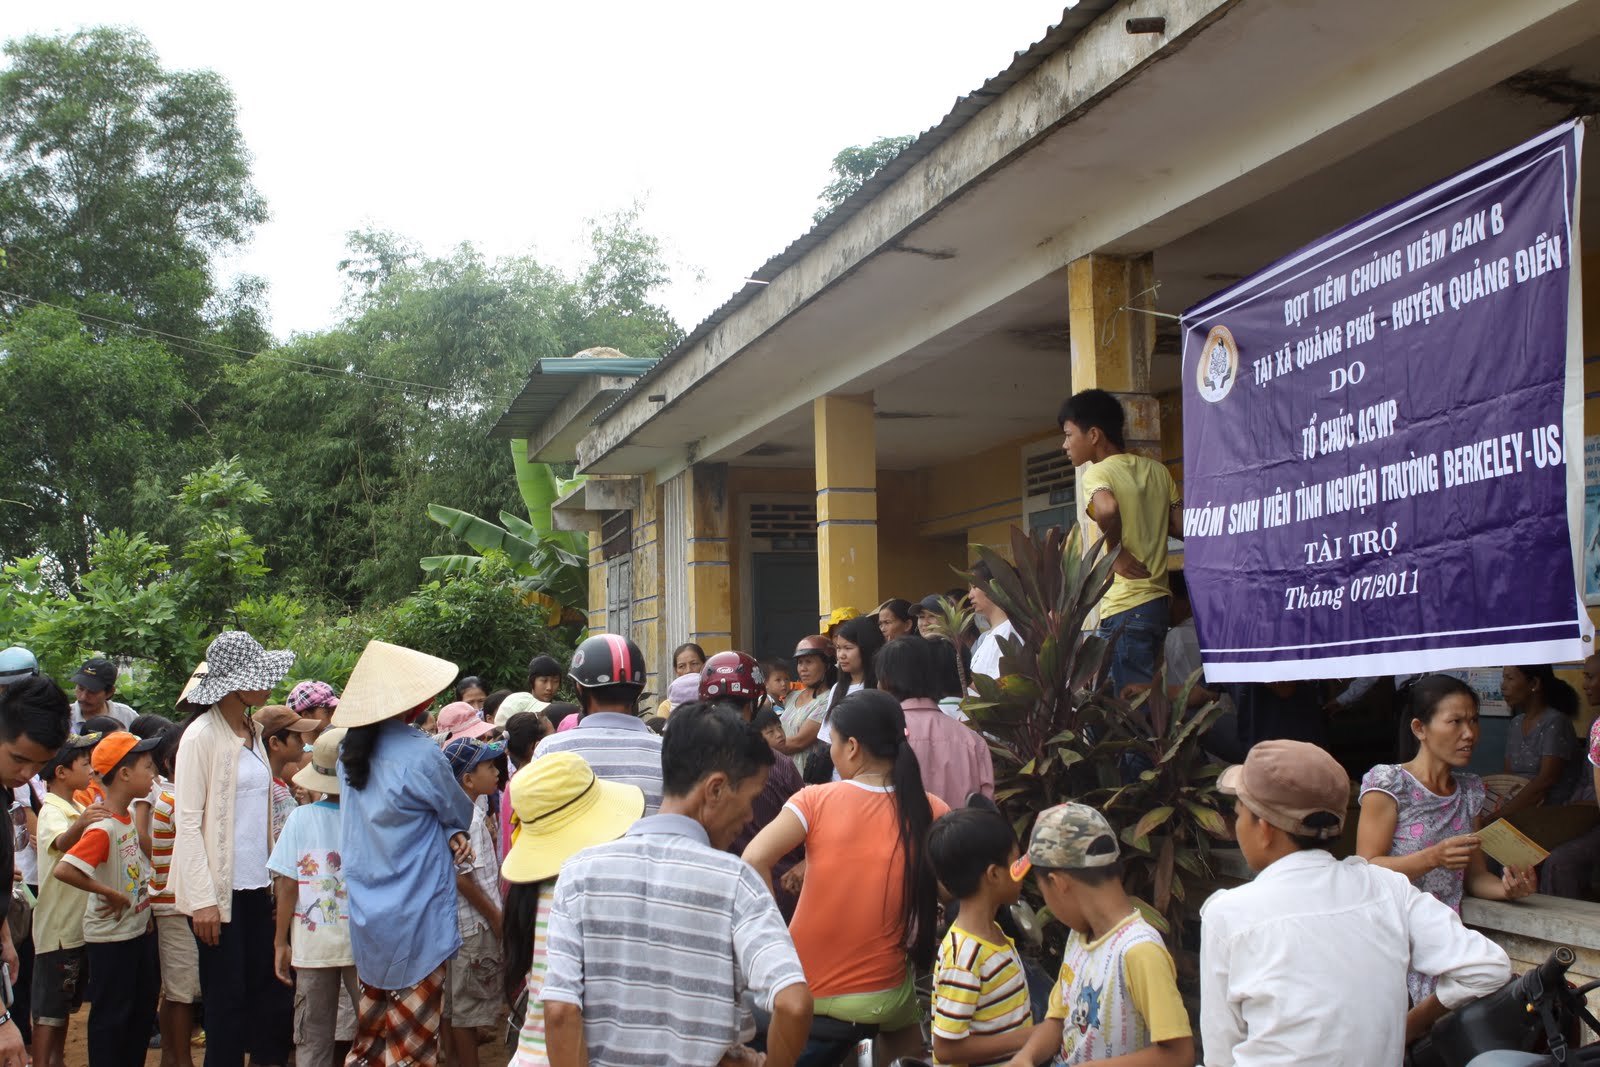 People crowding in front of Hepatitis B vaccination clinic VMO members were volunteering at.